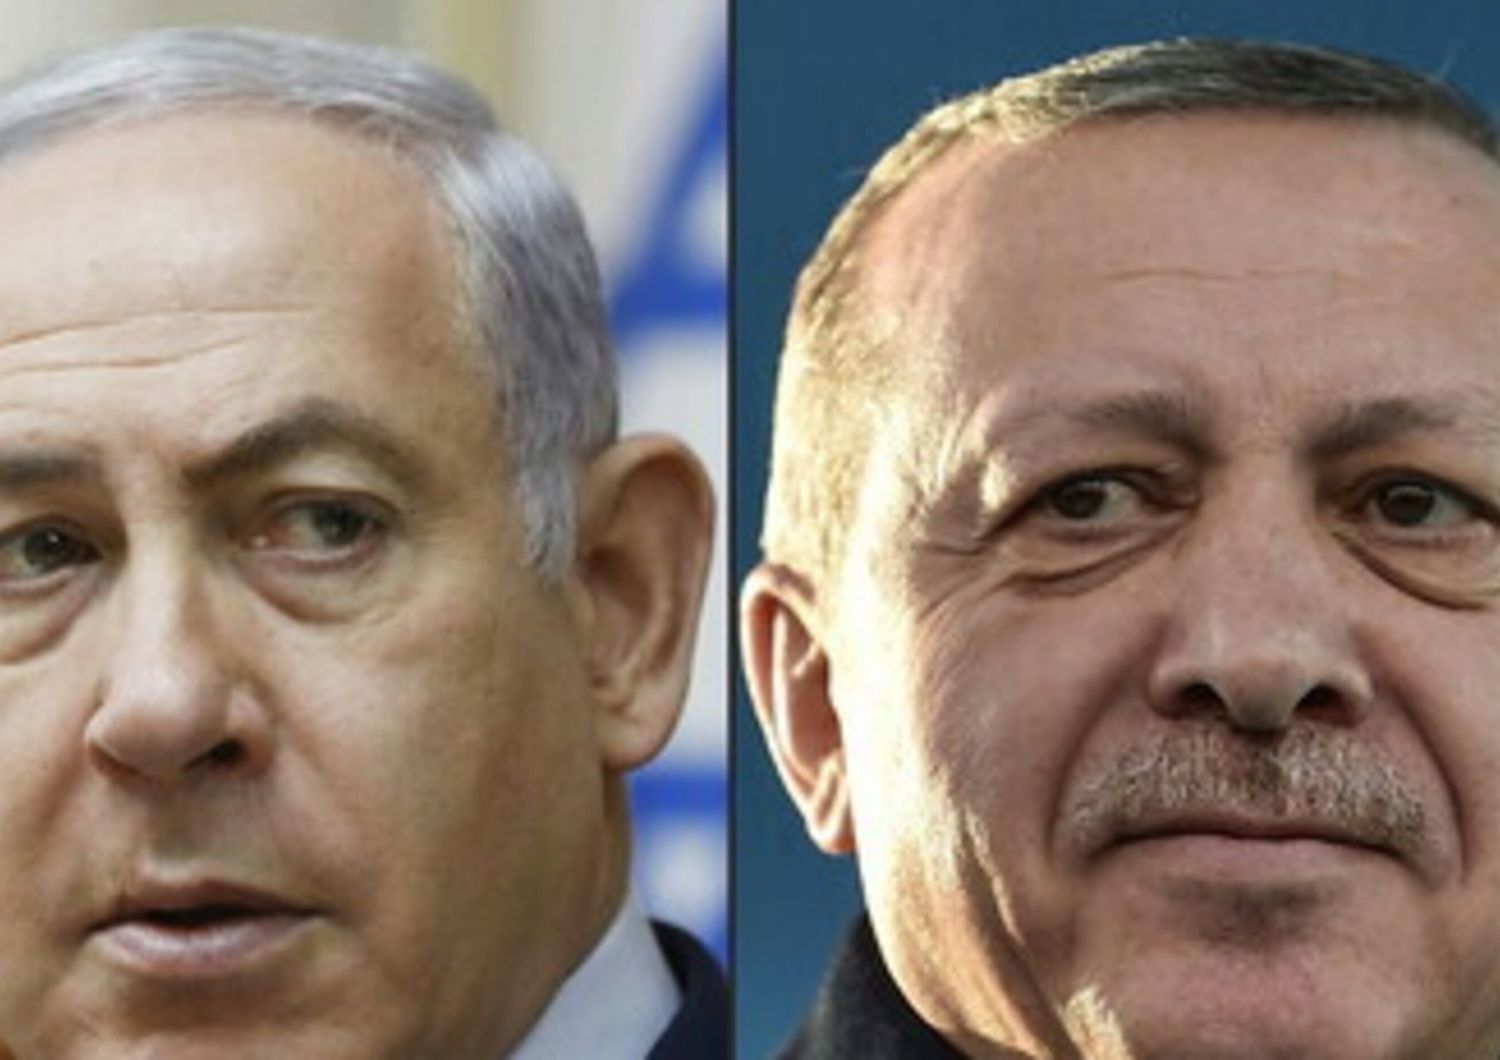 Il premier israeliano Netanyahu e il presidente turco Erdogan